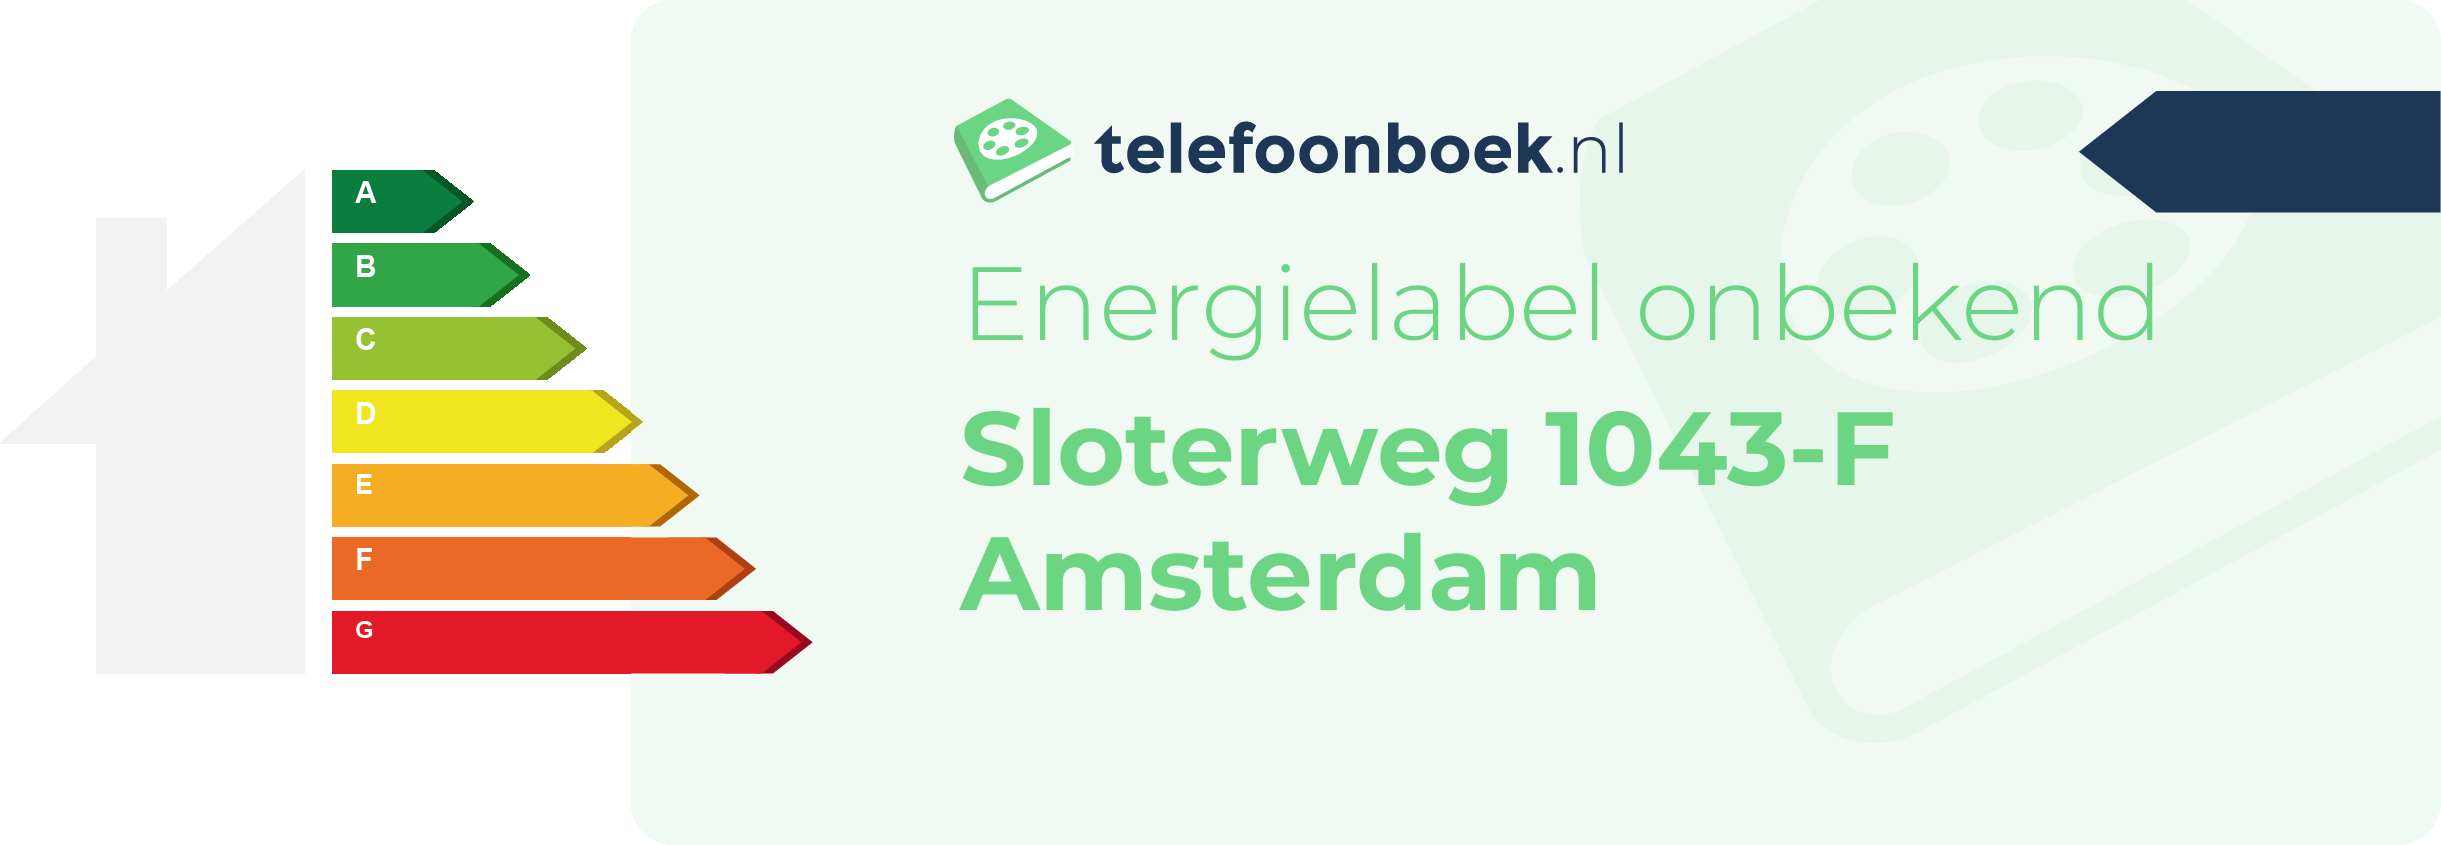 Energielabel Sloterweg 1043-F Amsterdam